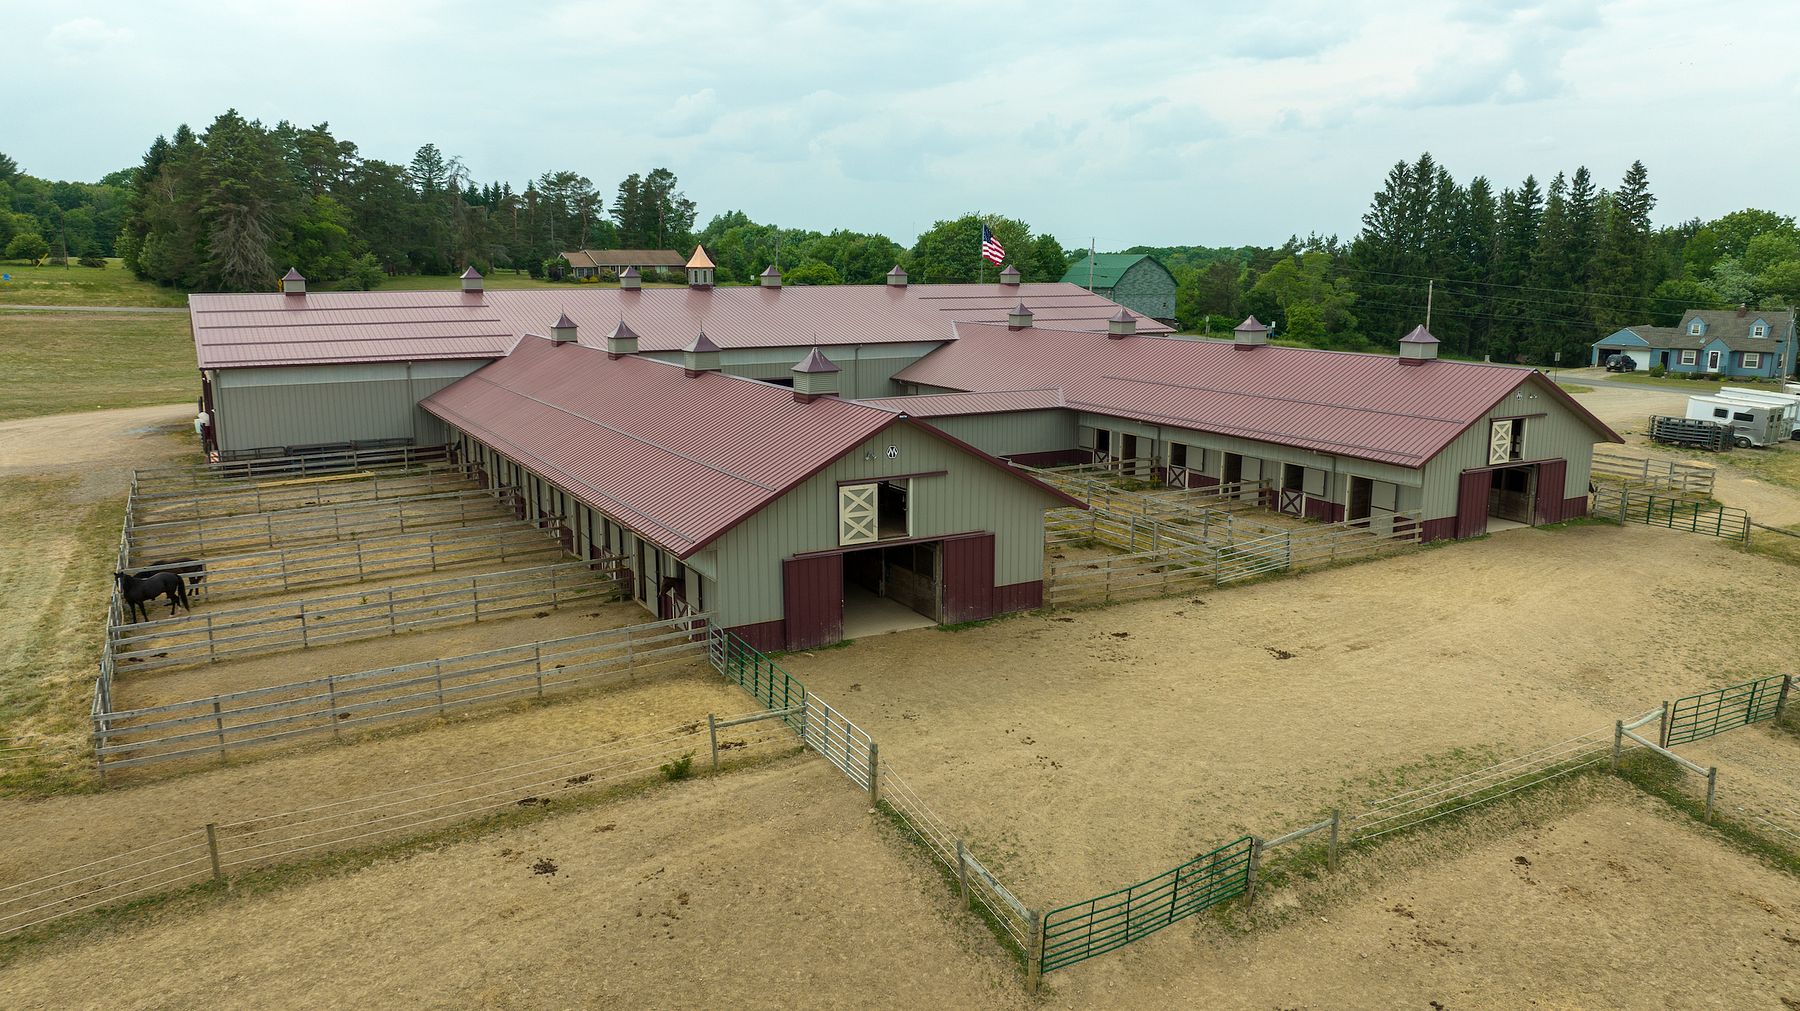 81 Acres of Recreational Land & Farm for Sale in Warren, Pennsylvania ...